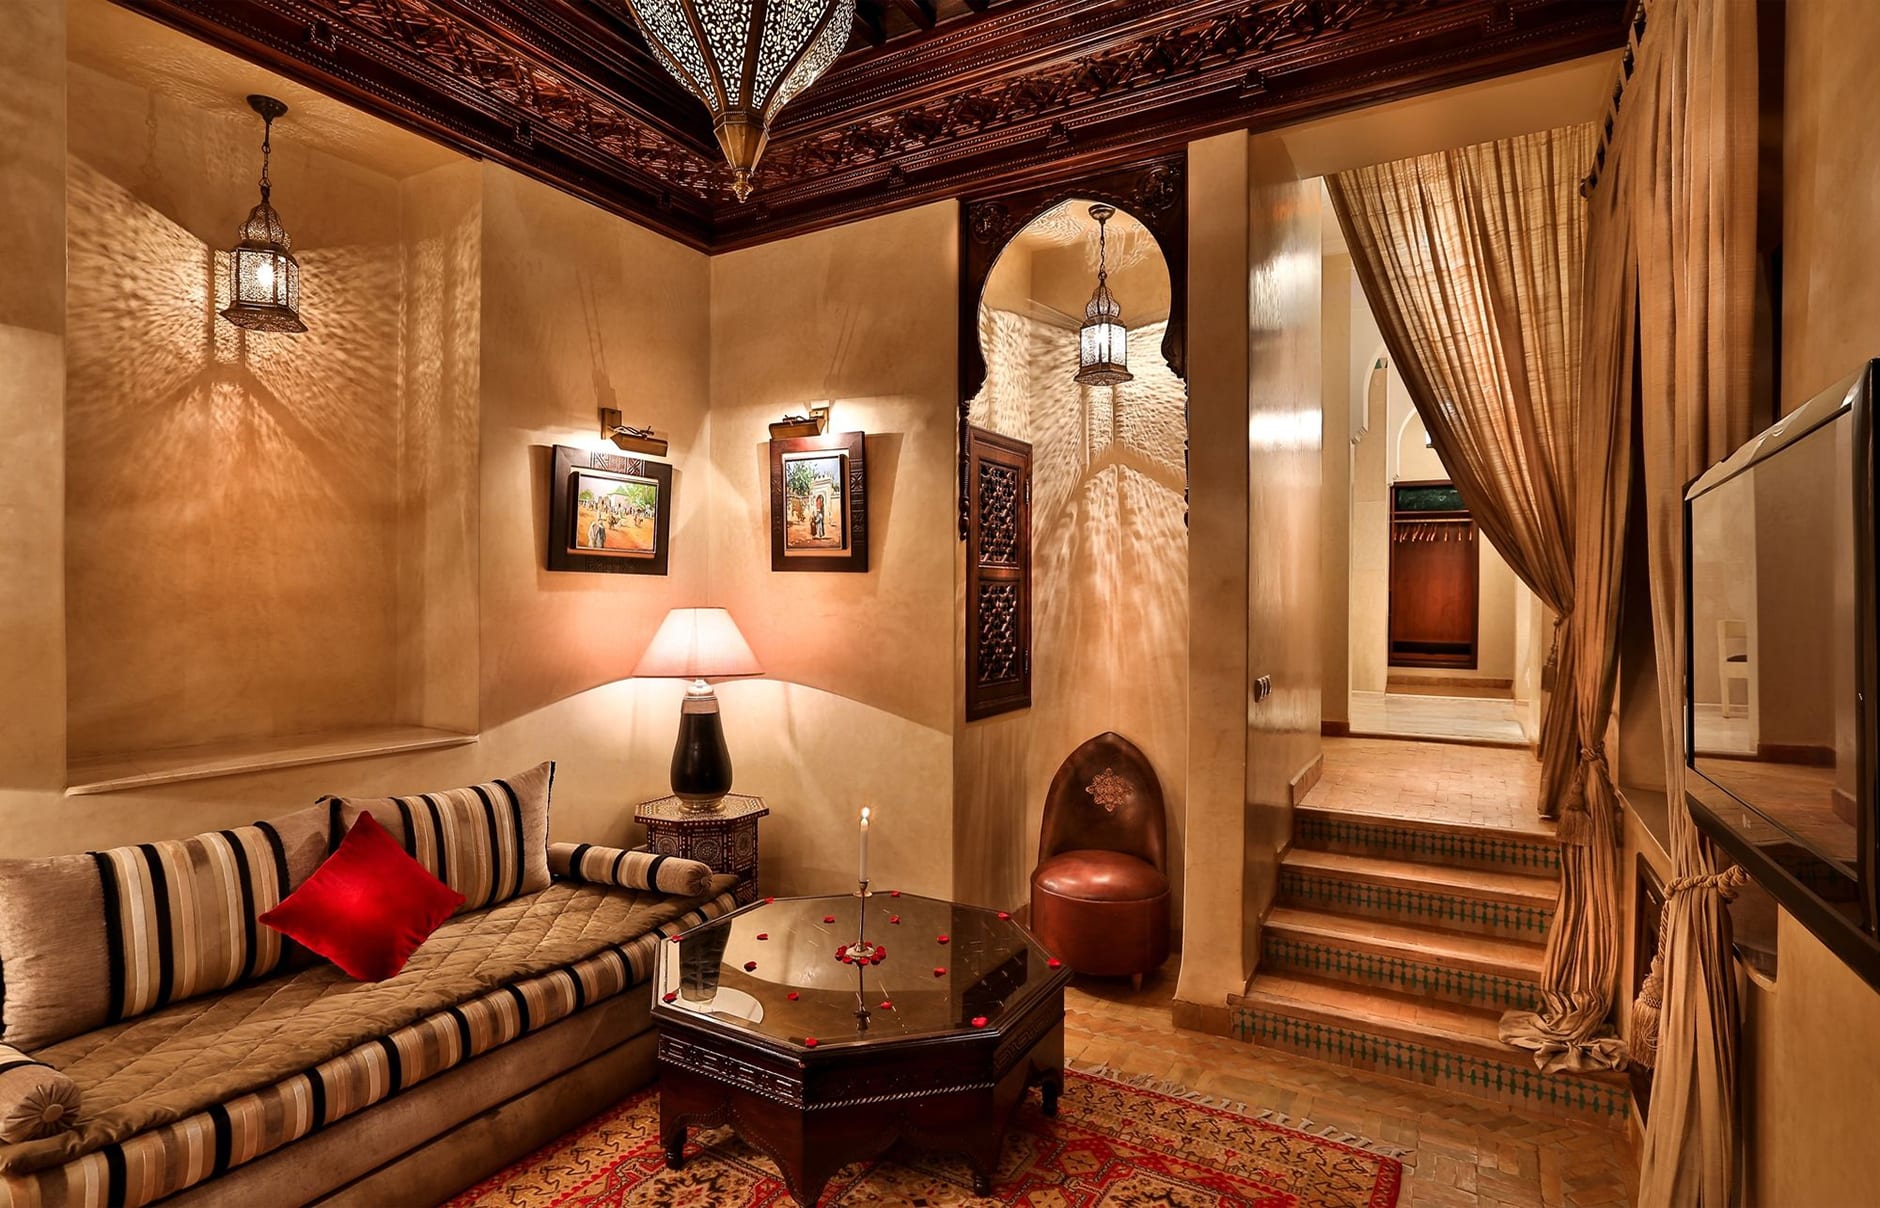 Riad Kniza, Marrakech, Morocco. Hotel Review by TravelPlusStyle. Photo © Riad Kniza